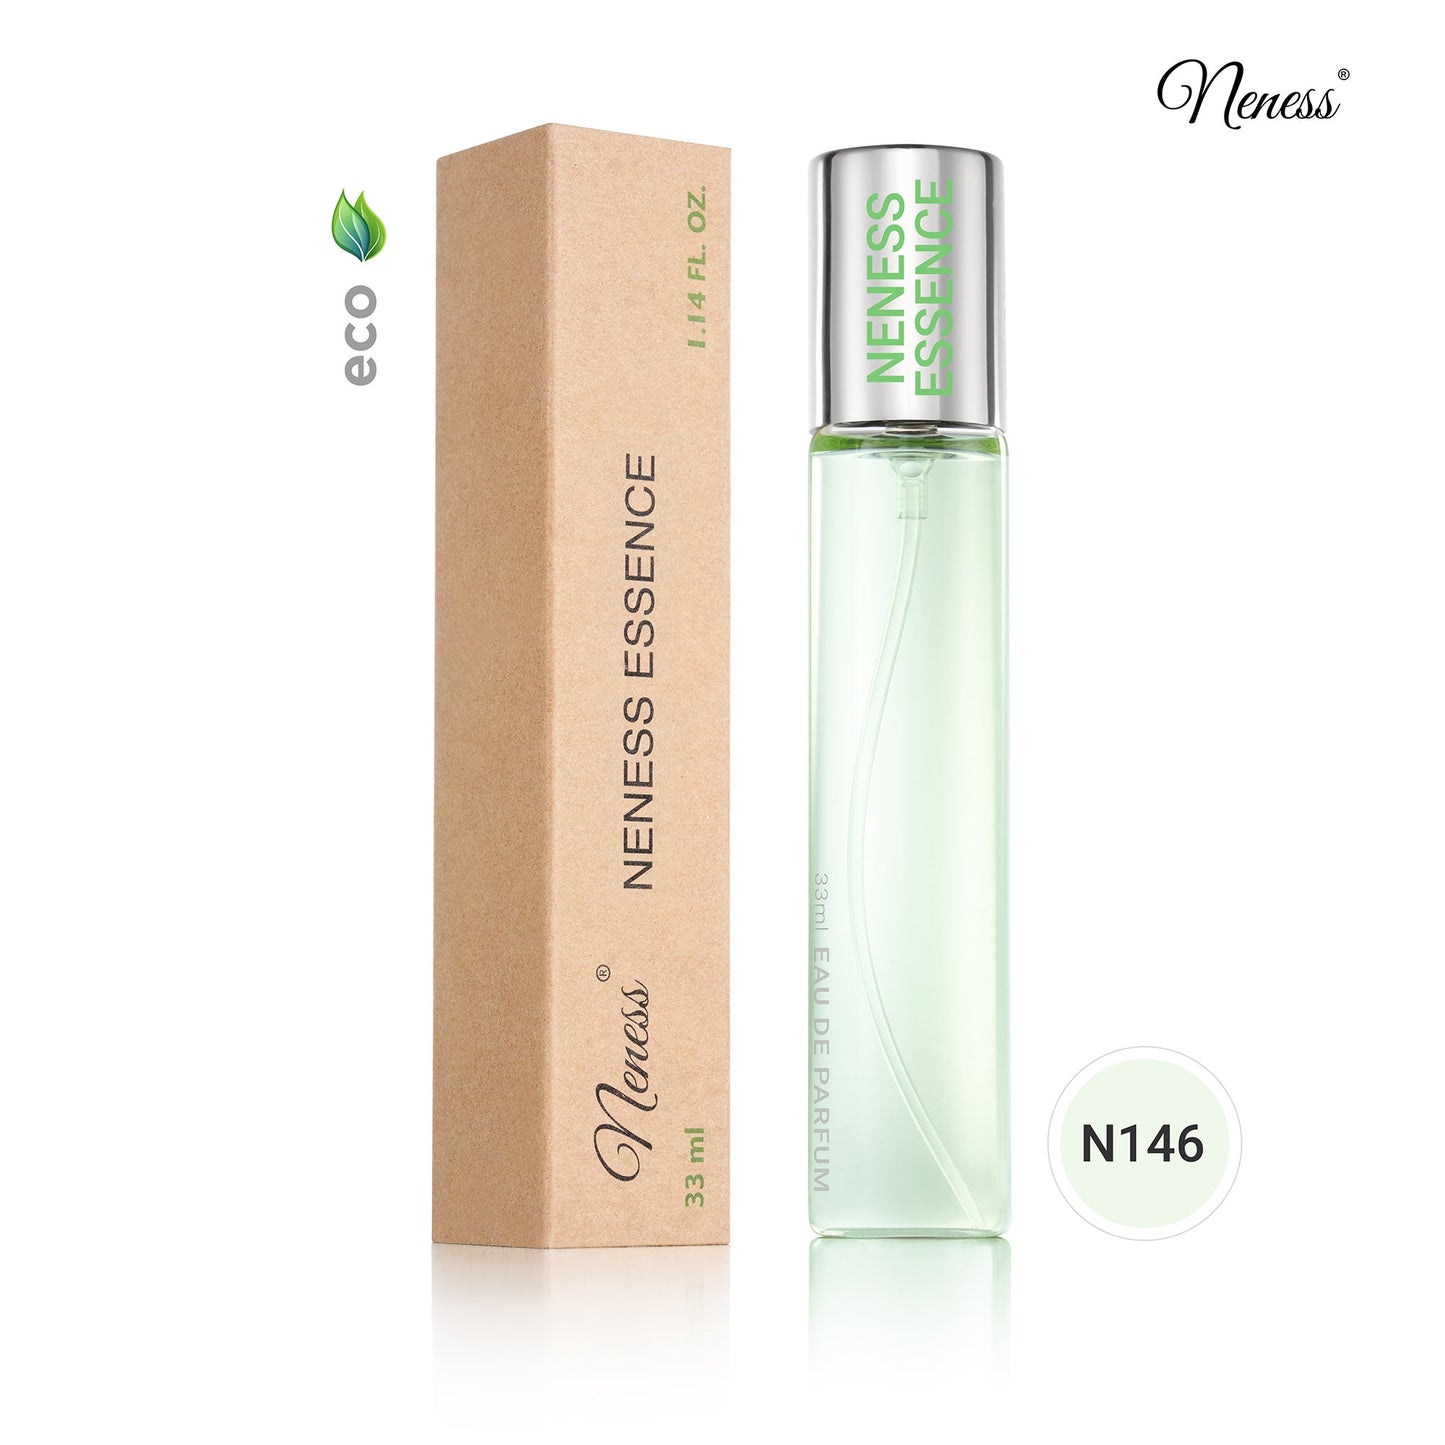 N146. Neness Essence - 33 ml - Perfumes For Men